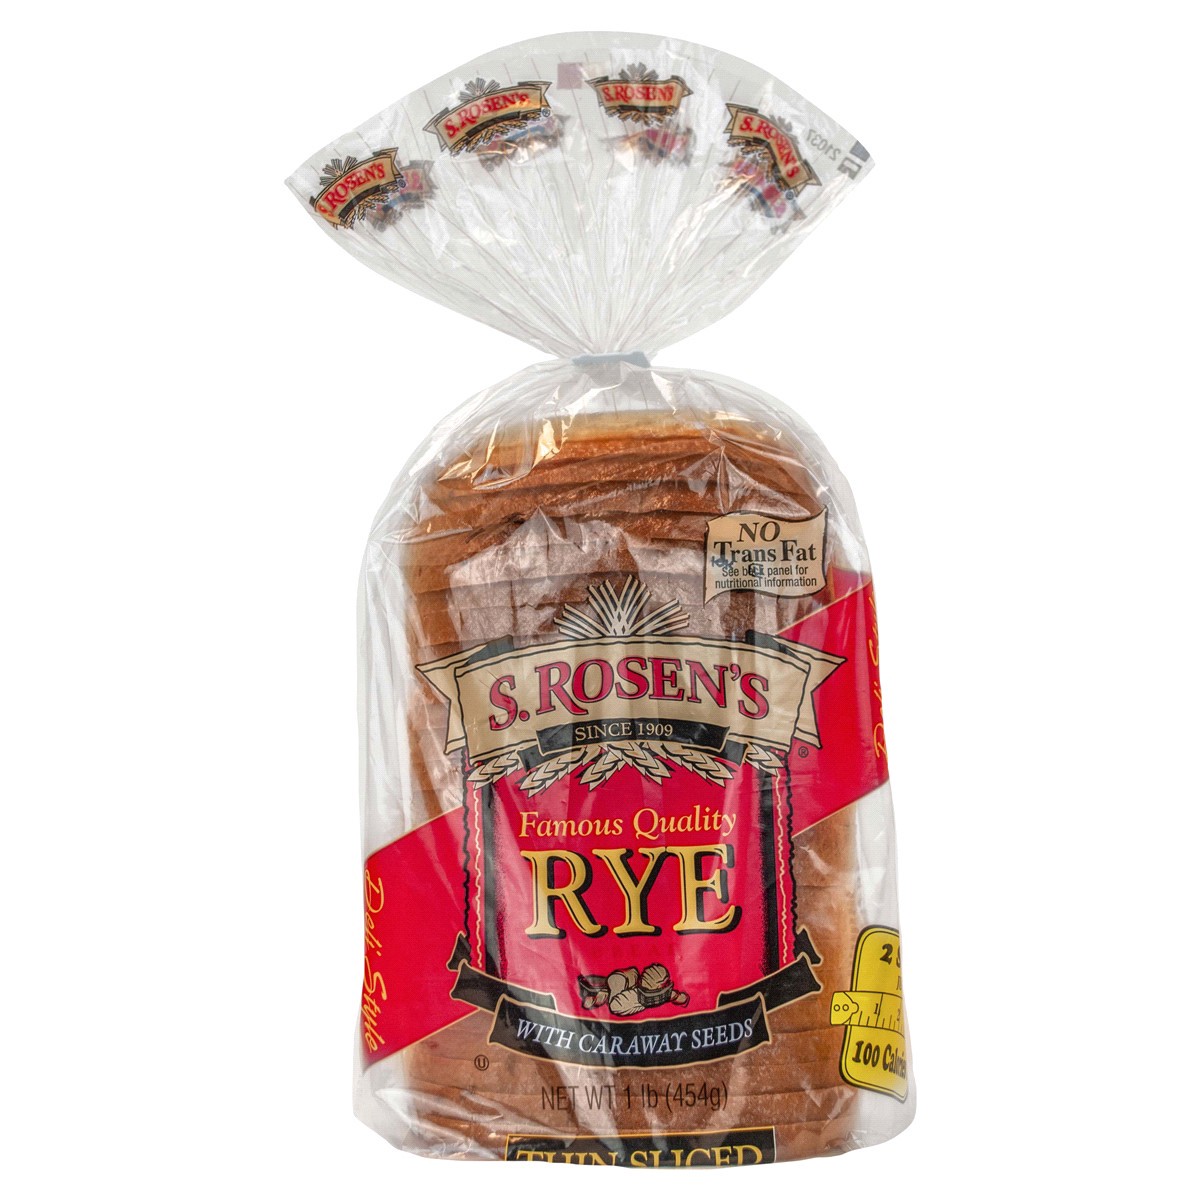 slide 1 of 1, S ROSENS S. Rosen's Rye with Caraway Seeds Bread, 16 oz